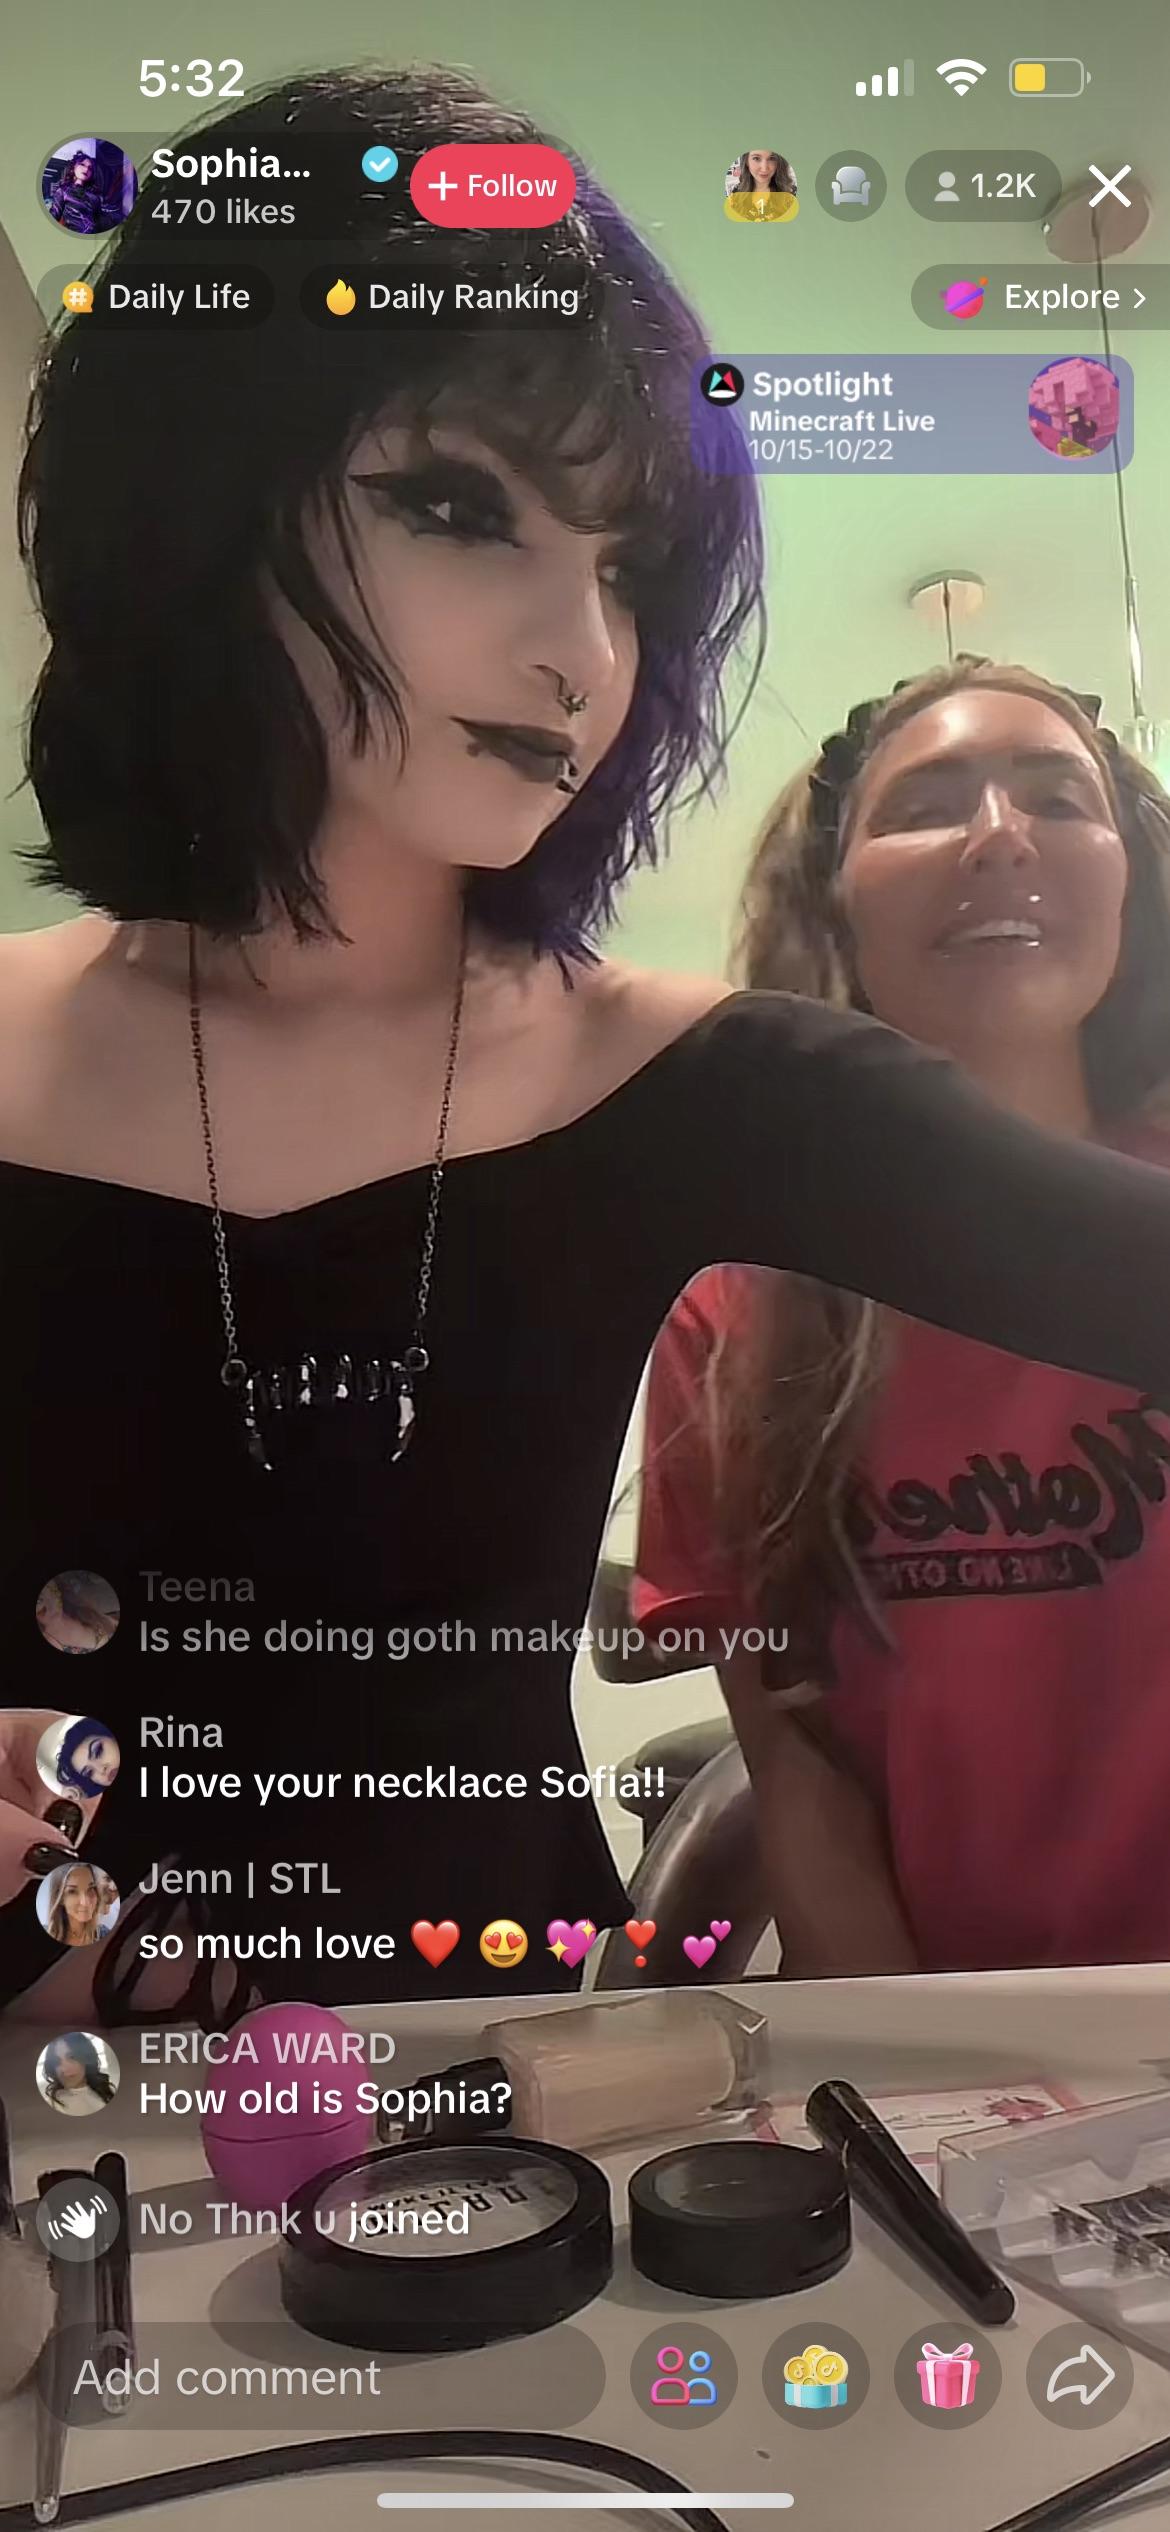 Farrah Abraham’s daughter Sophia showed off her Goth look on TikTok